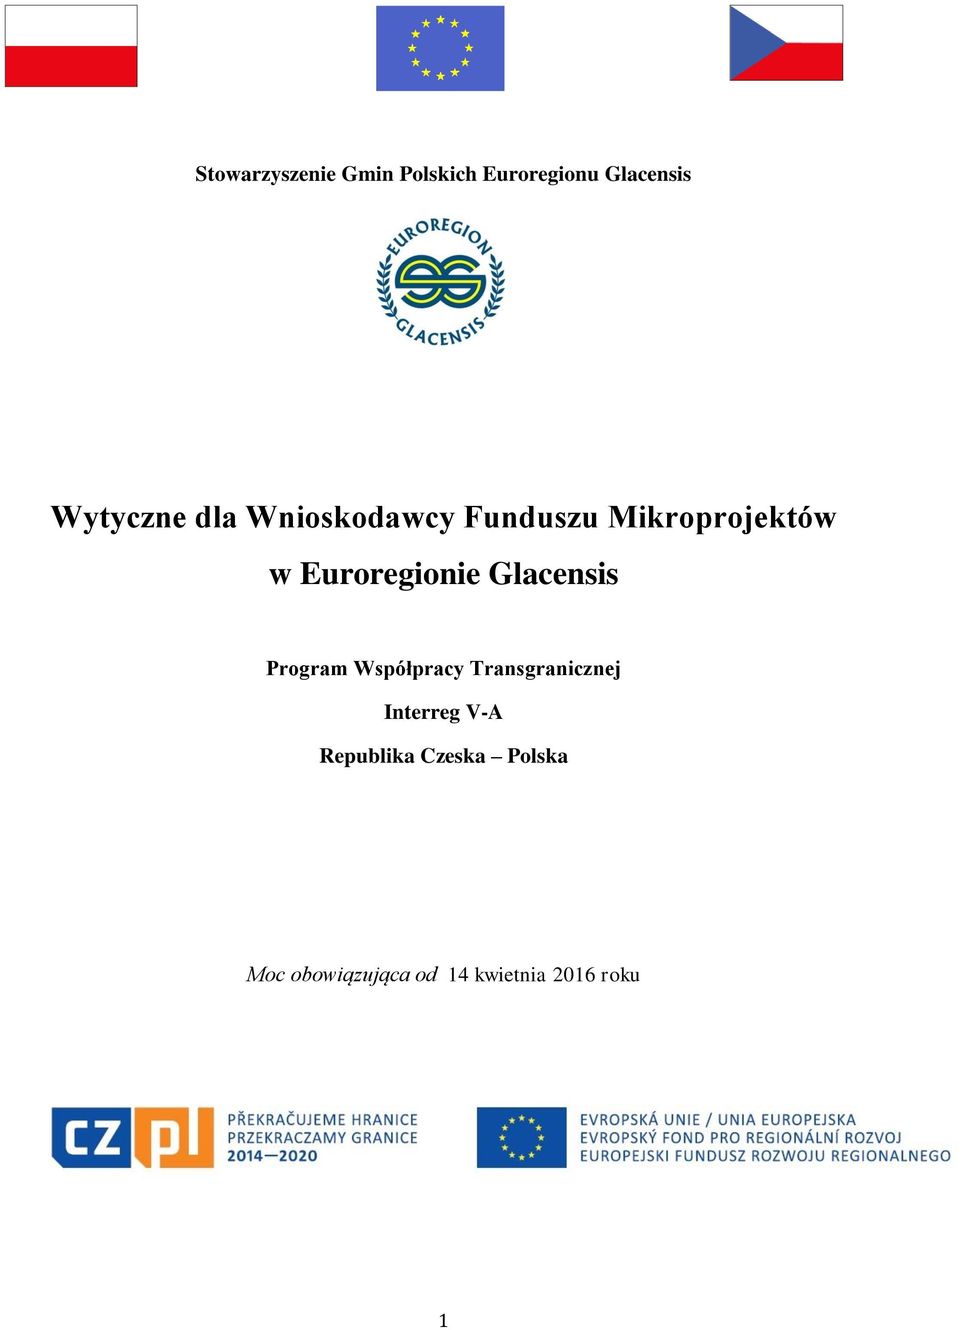 Glacensis Program Współpracy Transgranicznej Interreg V-A